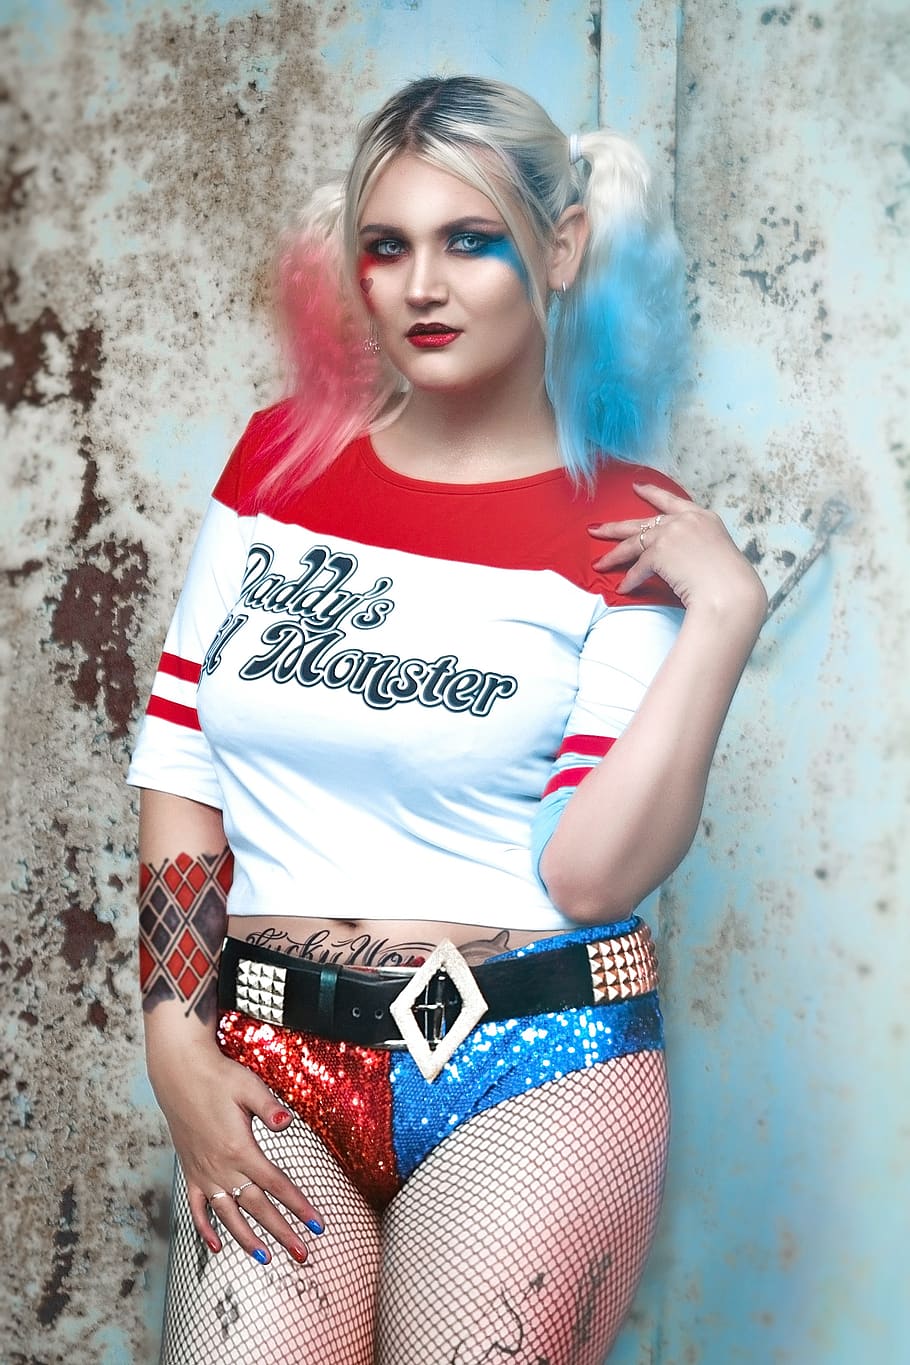 Harley Quinn Portrait 1080P, 2K, 4K, 5K HD wallpapers free download ...